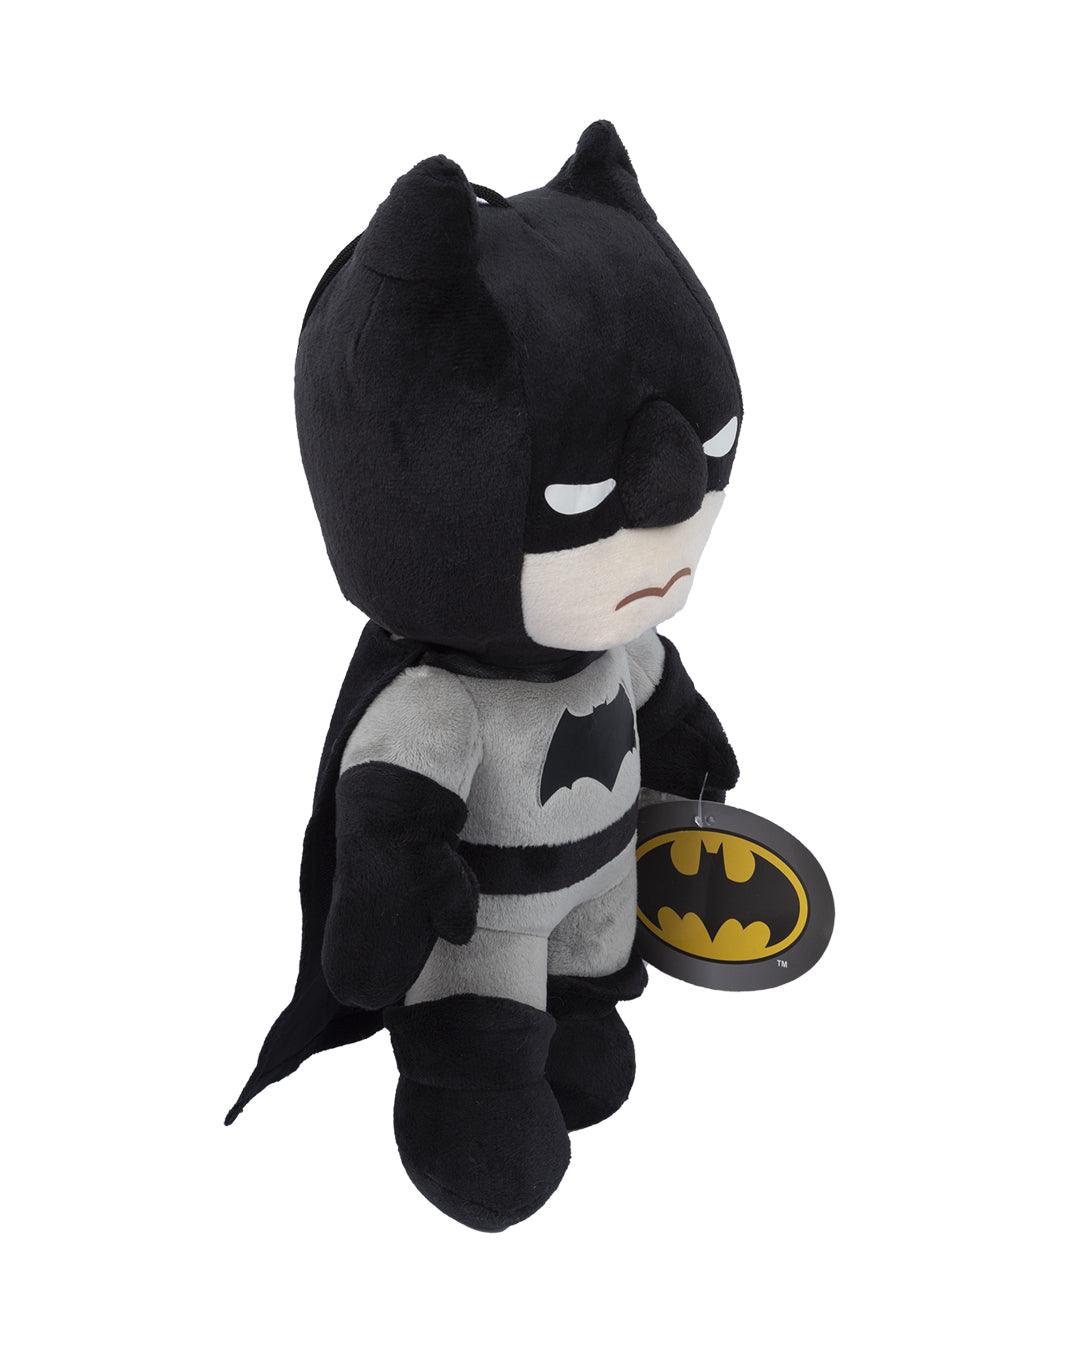 DIMPY STUFF Batman Stuffed Soft Toy (30 Cm, Black & Grey) - Plush Toy - MARKET 99